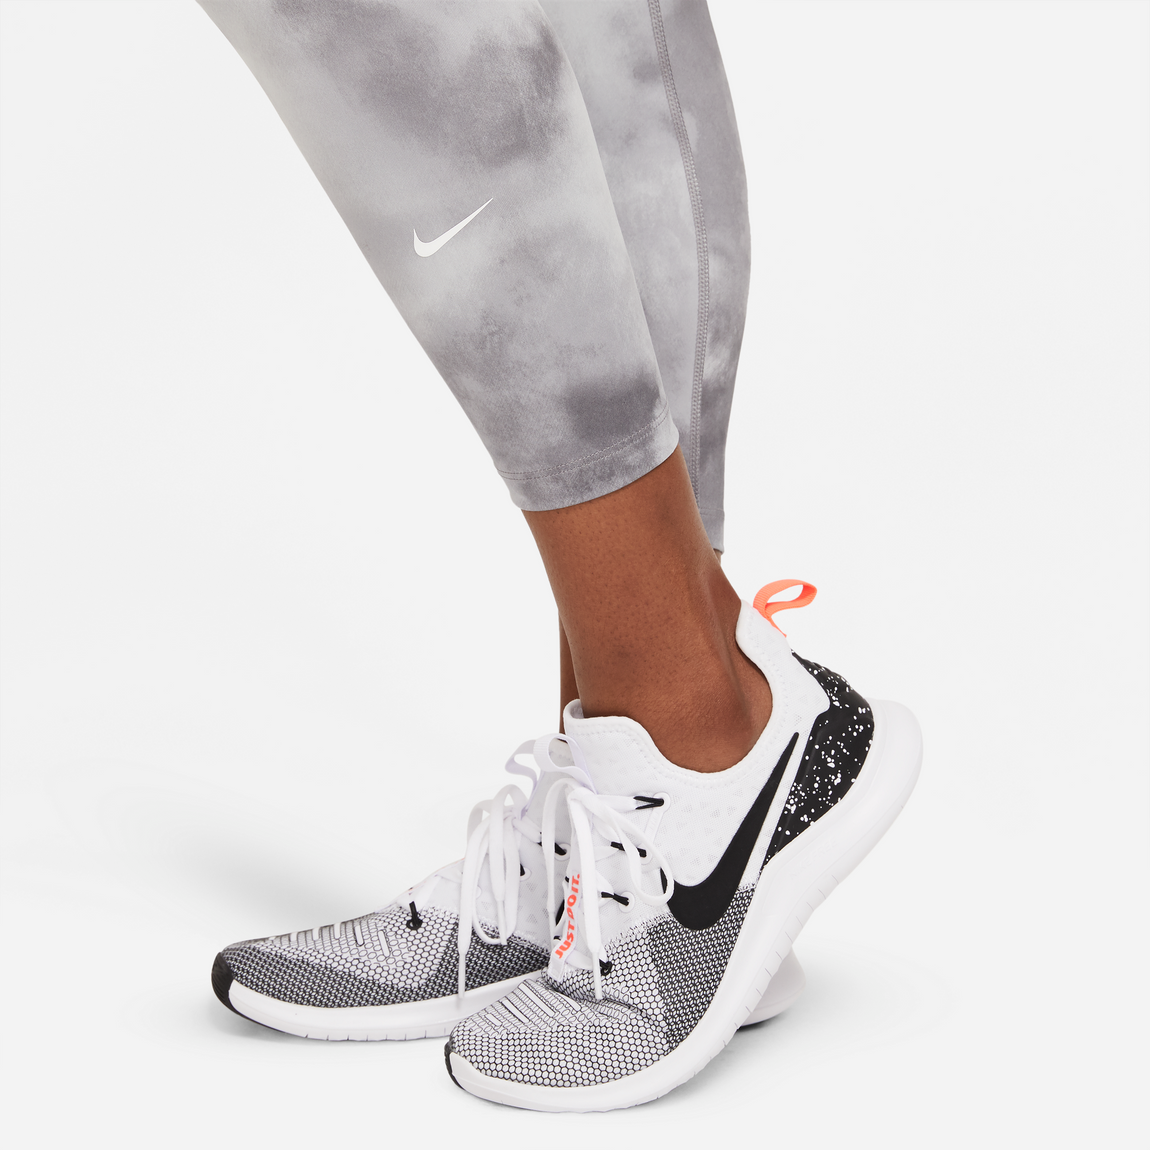 Nike Women's One Icon Mid-Rise Crop Leggings (Smoke Grey/White) - Nike Women's One Icon Mid-Rise Crop Leggings (Smoke Grey/White) - 